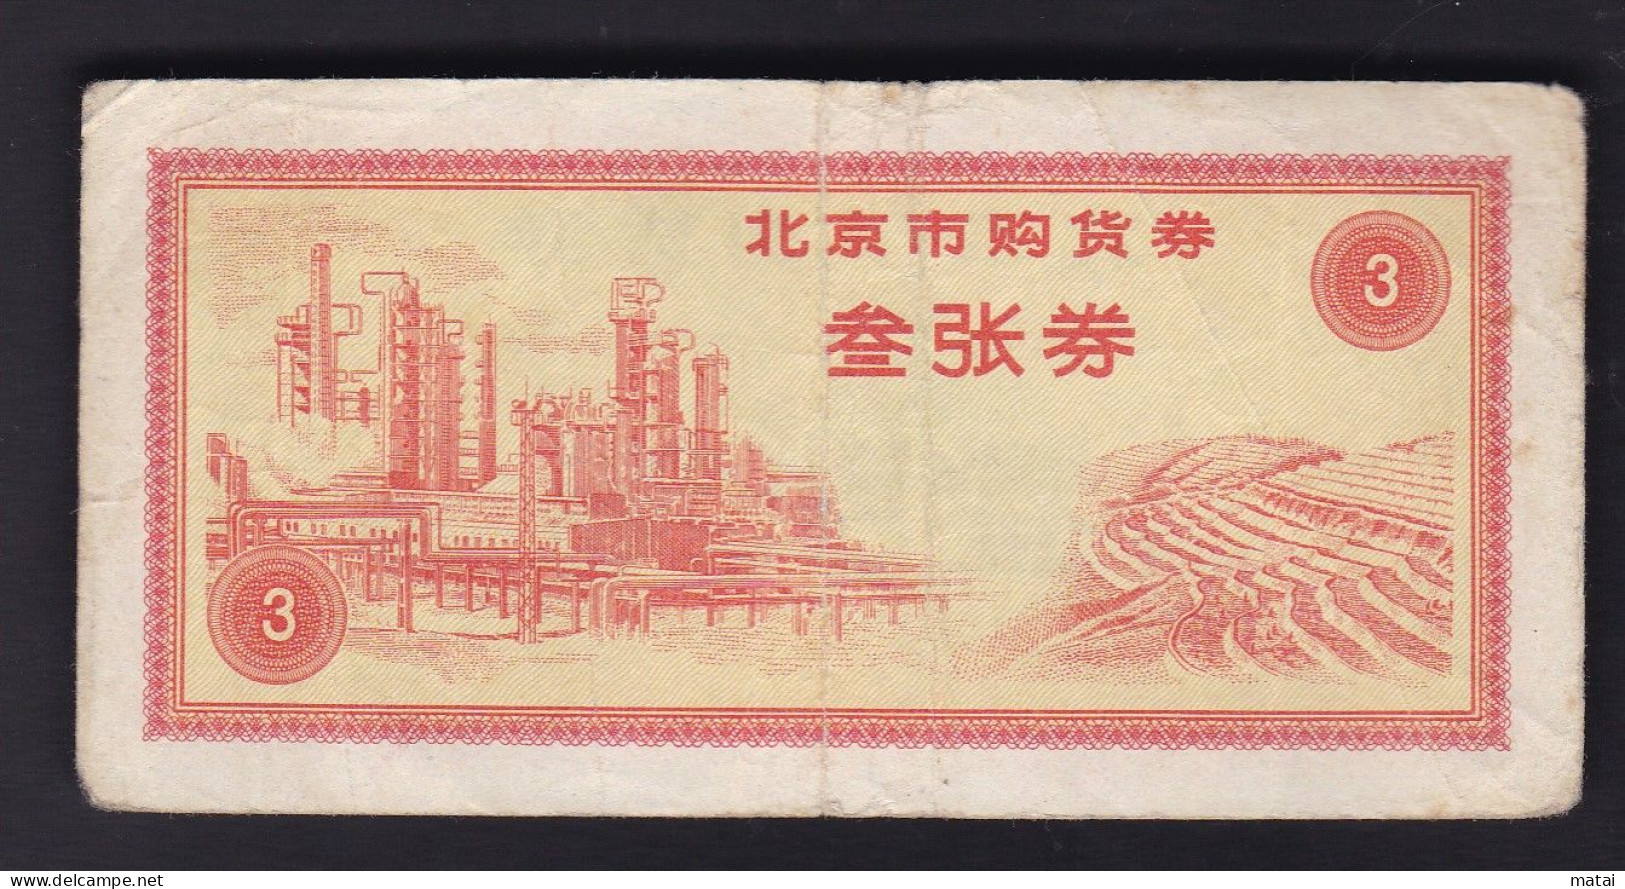 CHINA 1971 Beijing Purchase Voucher Three Coupon - Tickets - Vouchers